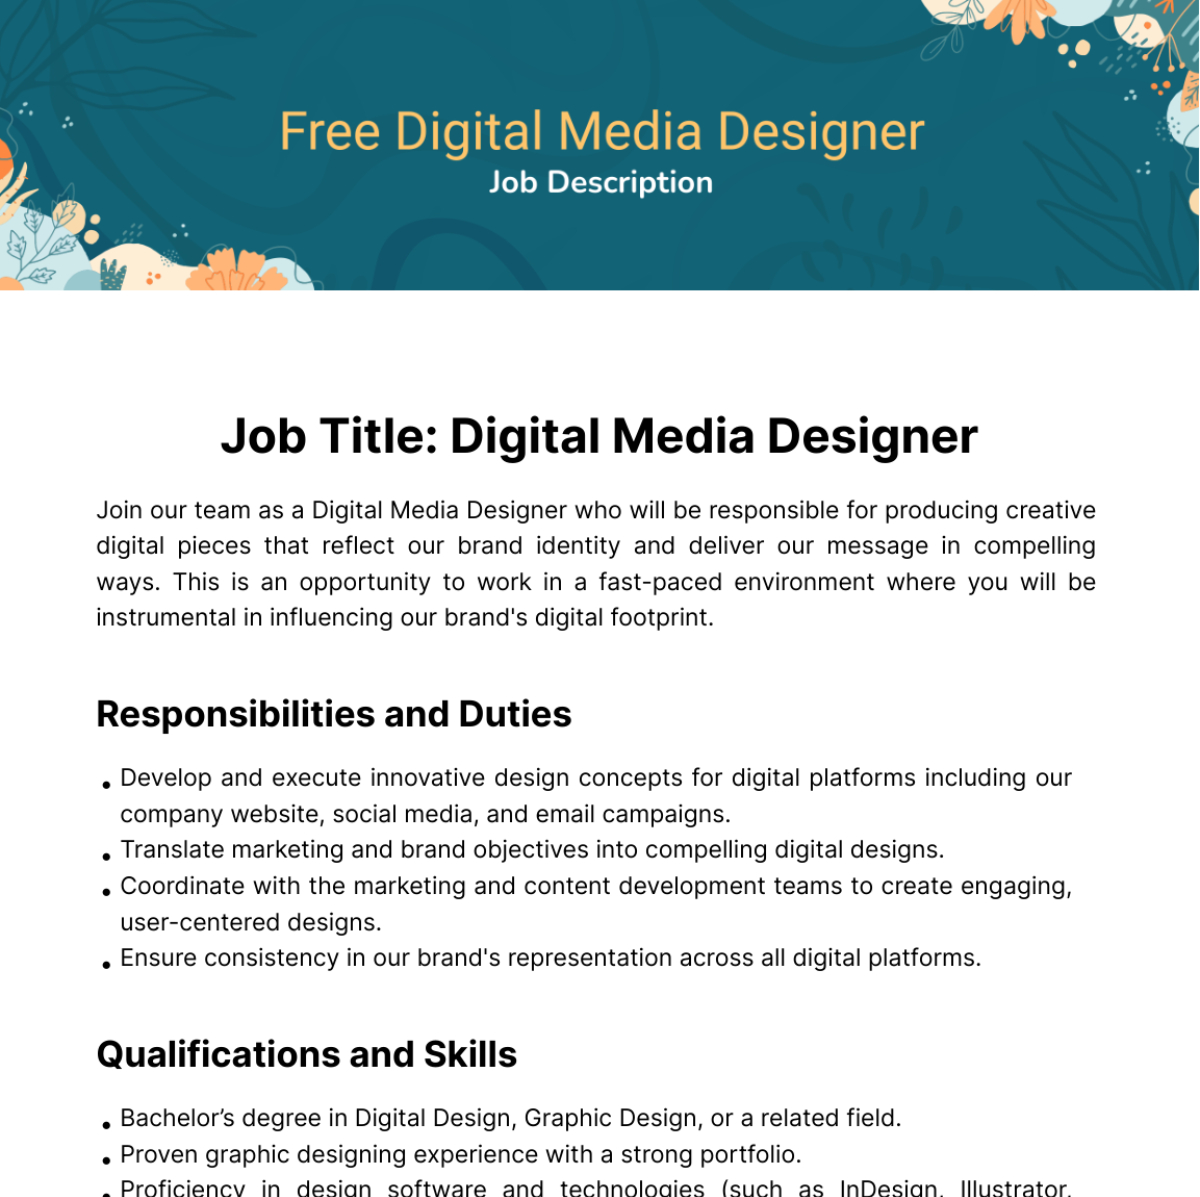 Free Digital Media Designer Job Description Template